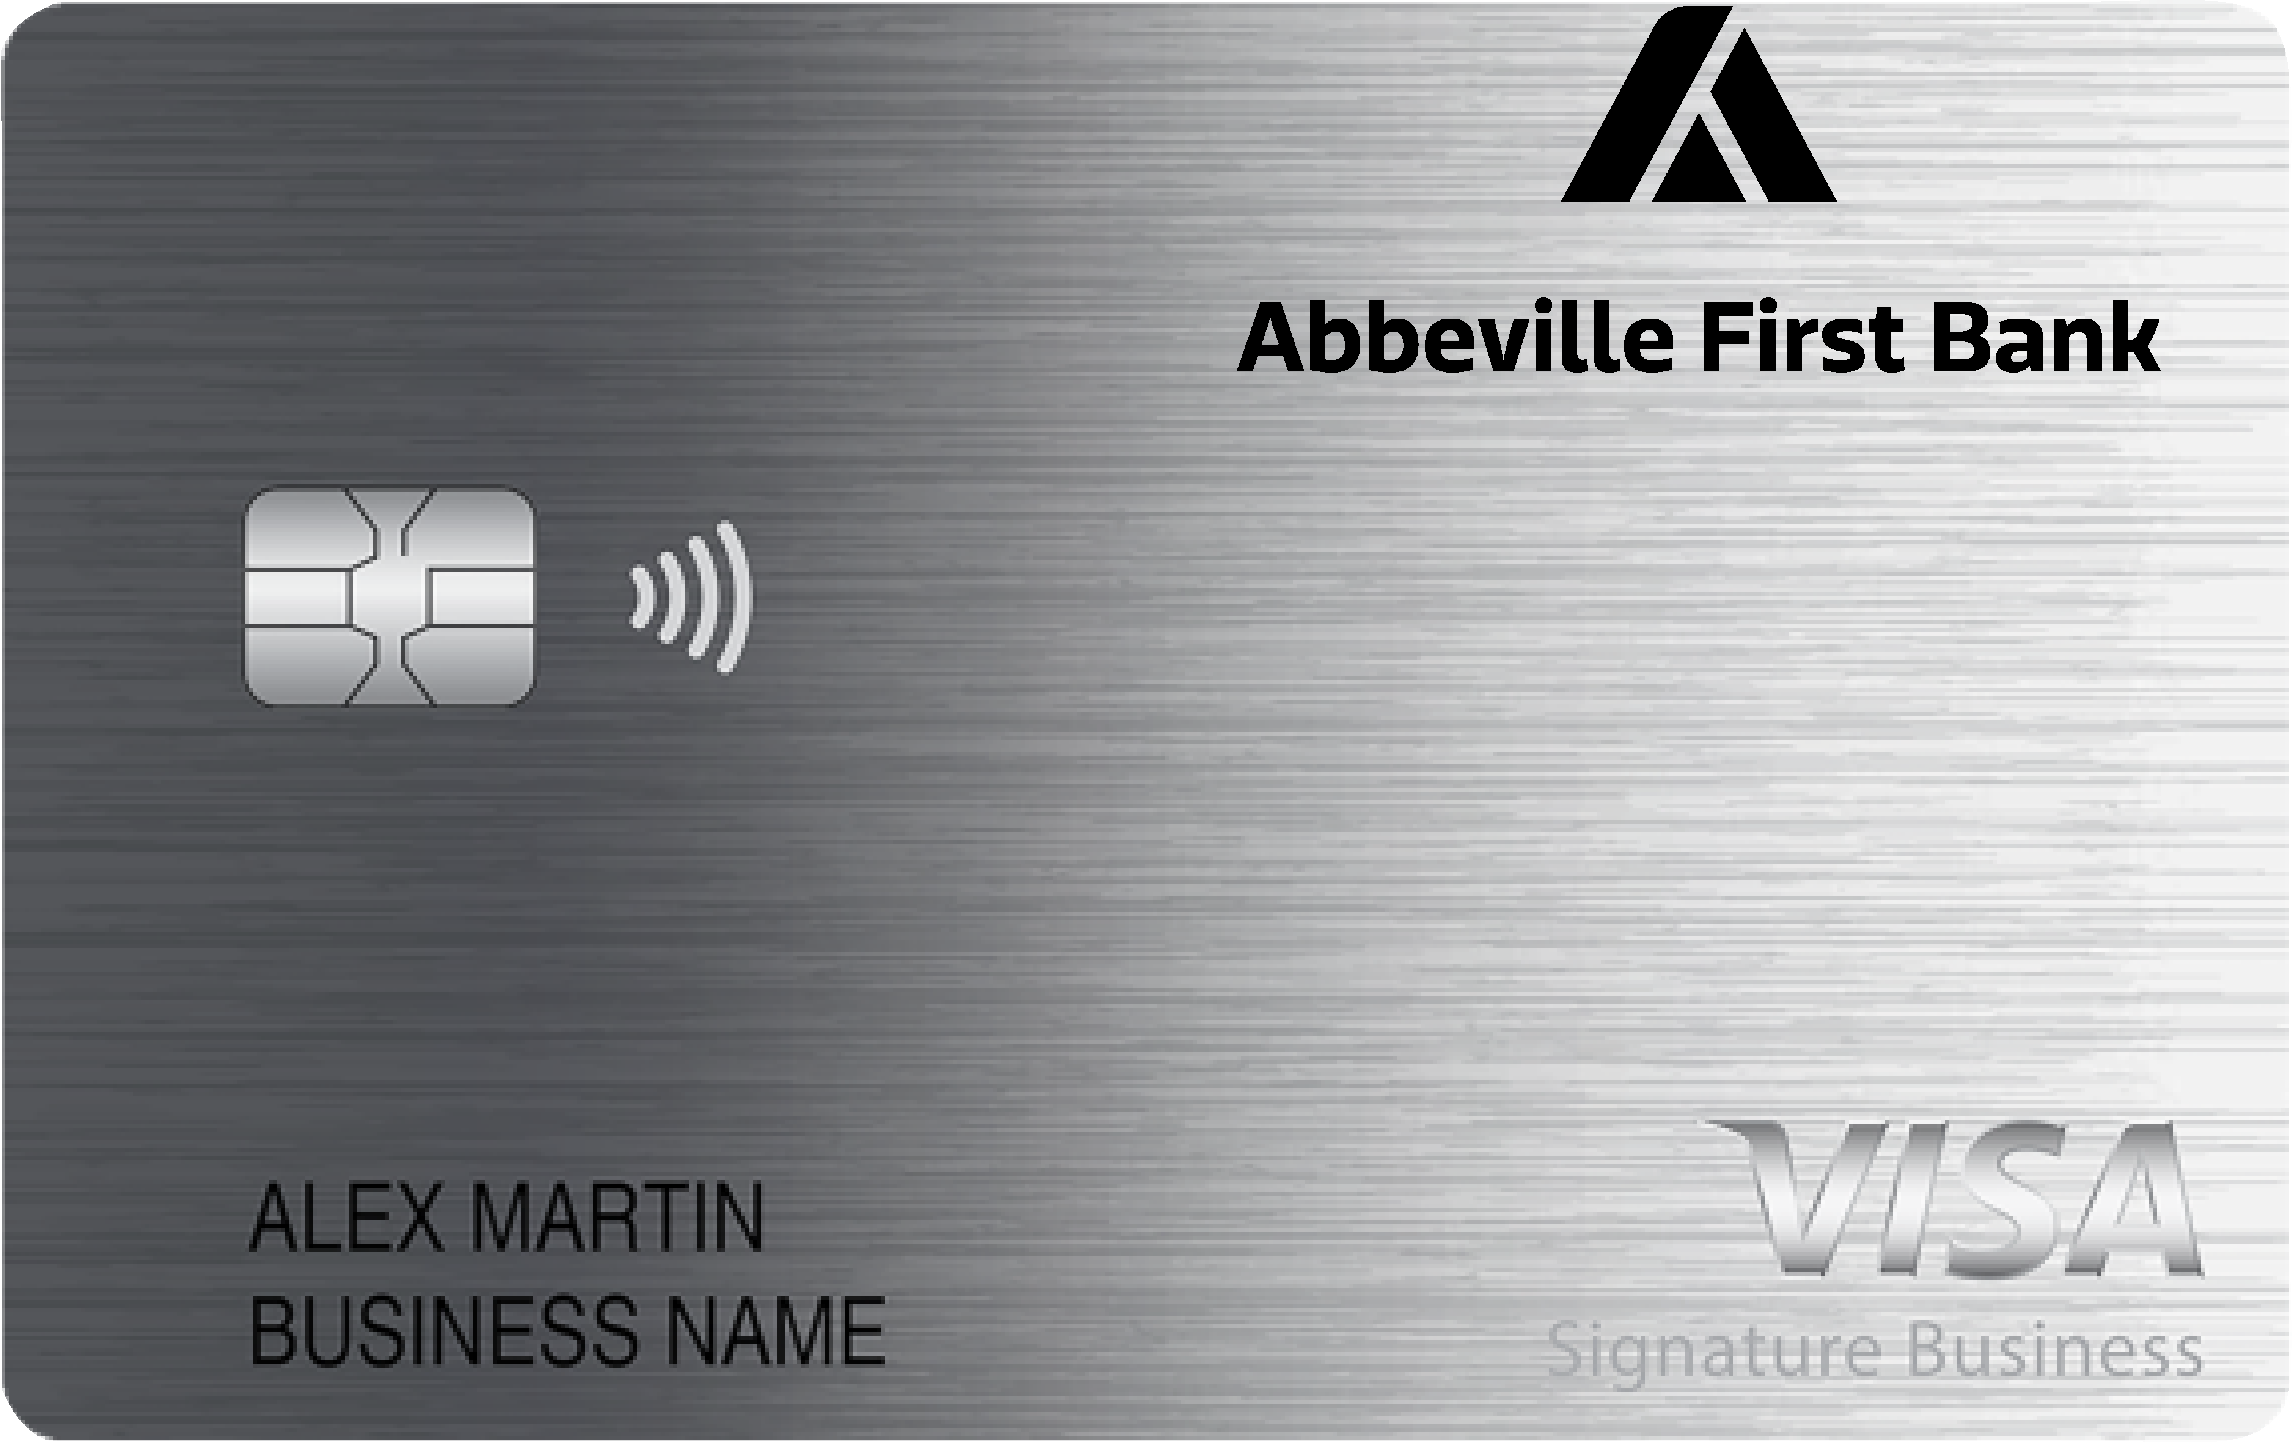 Abbeville First Bank